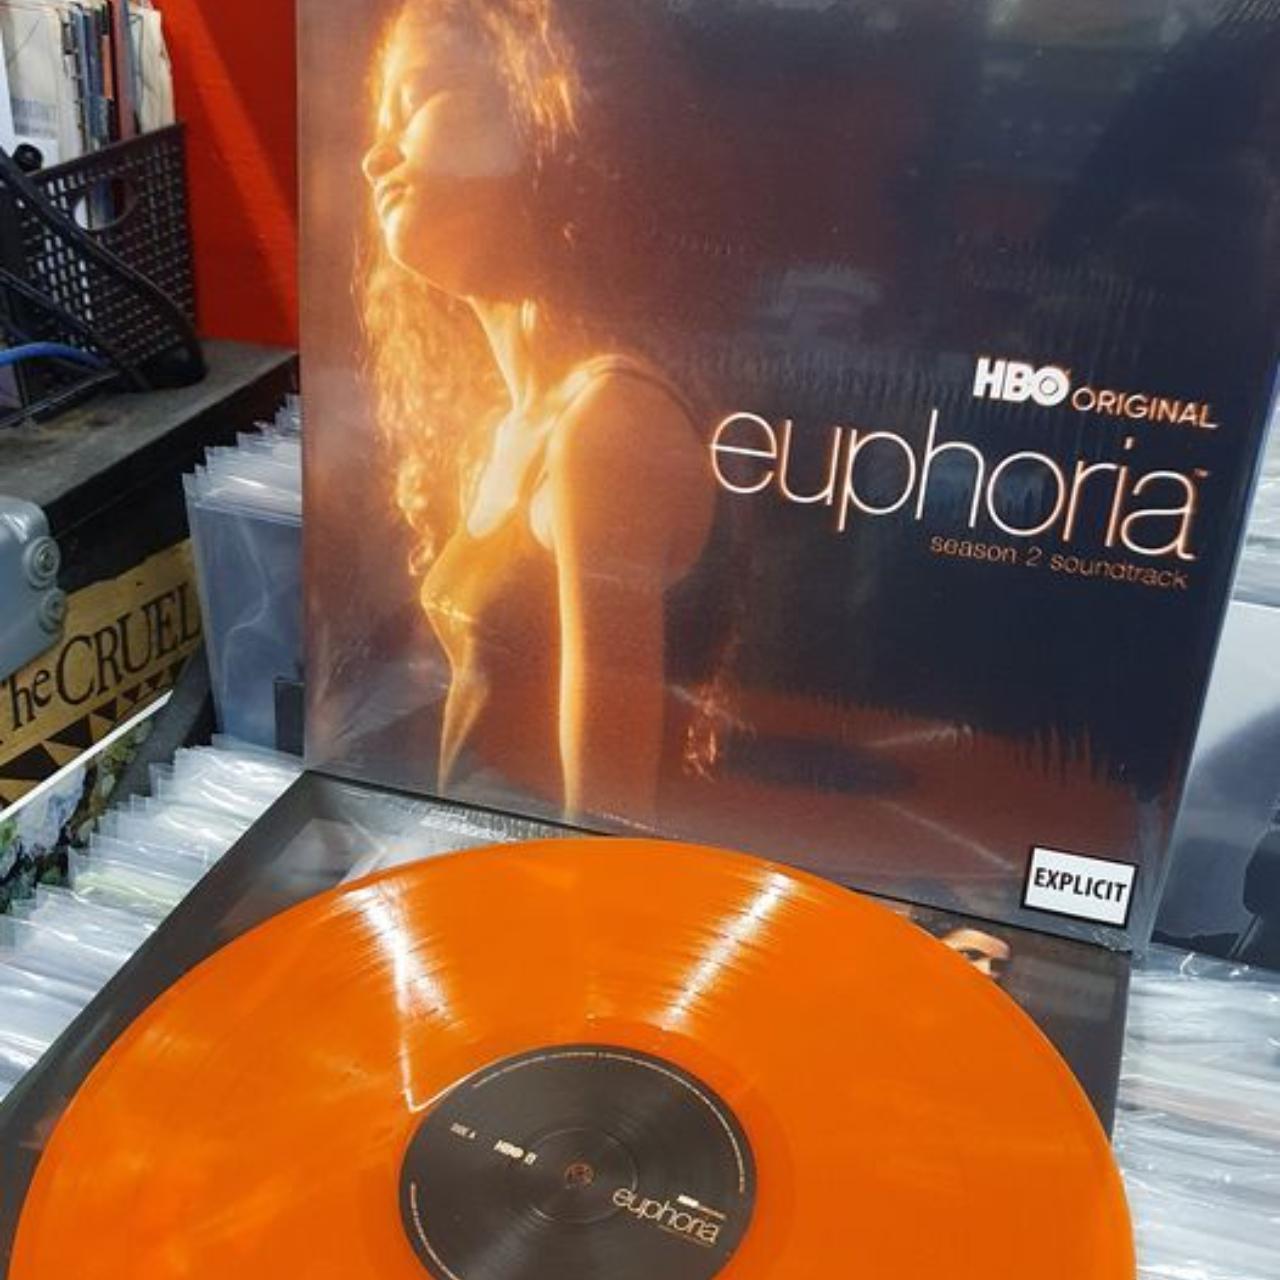  Euphoria Season 2 (An HBO Original Series Soundtrack): CDs &  Vinyl